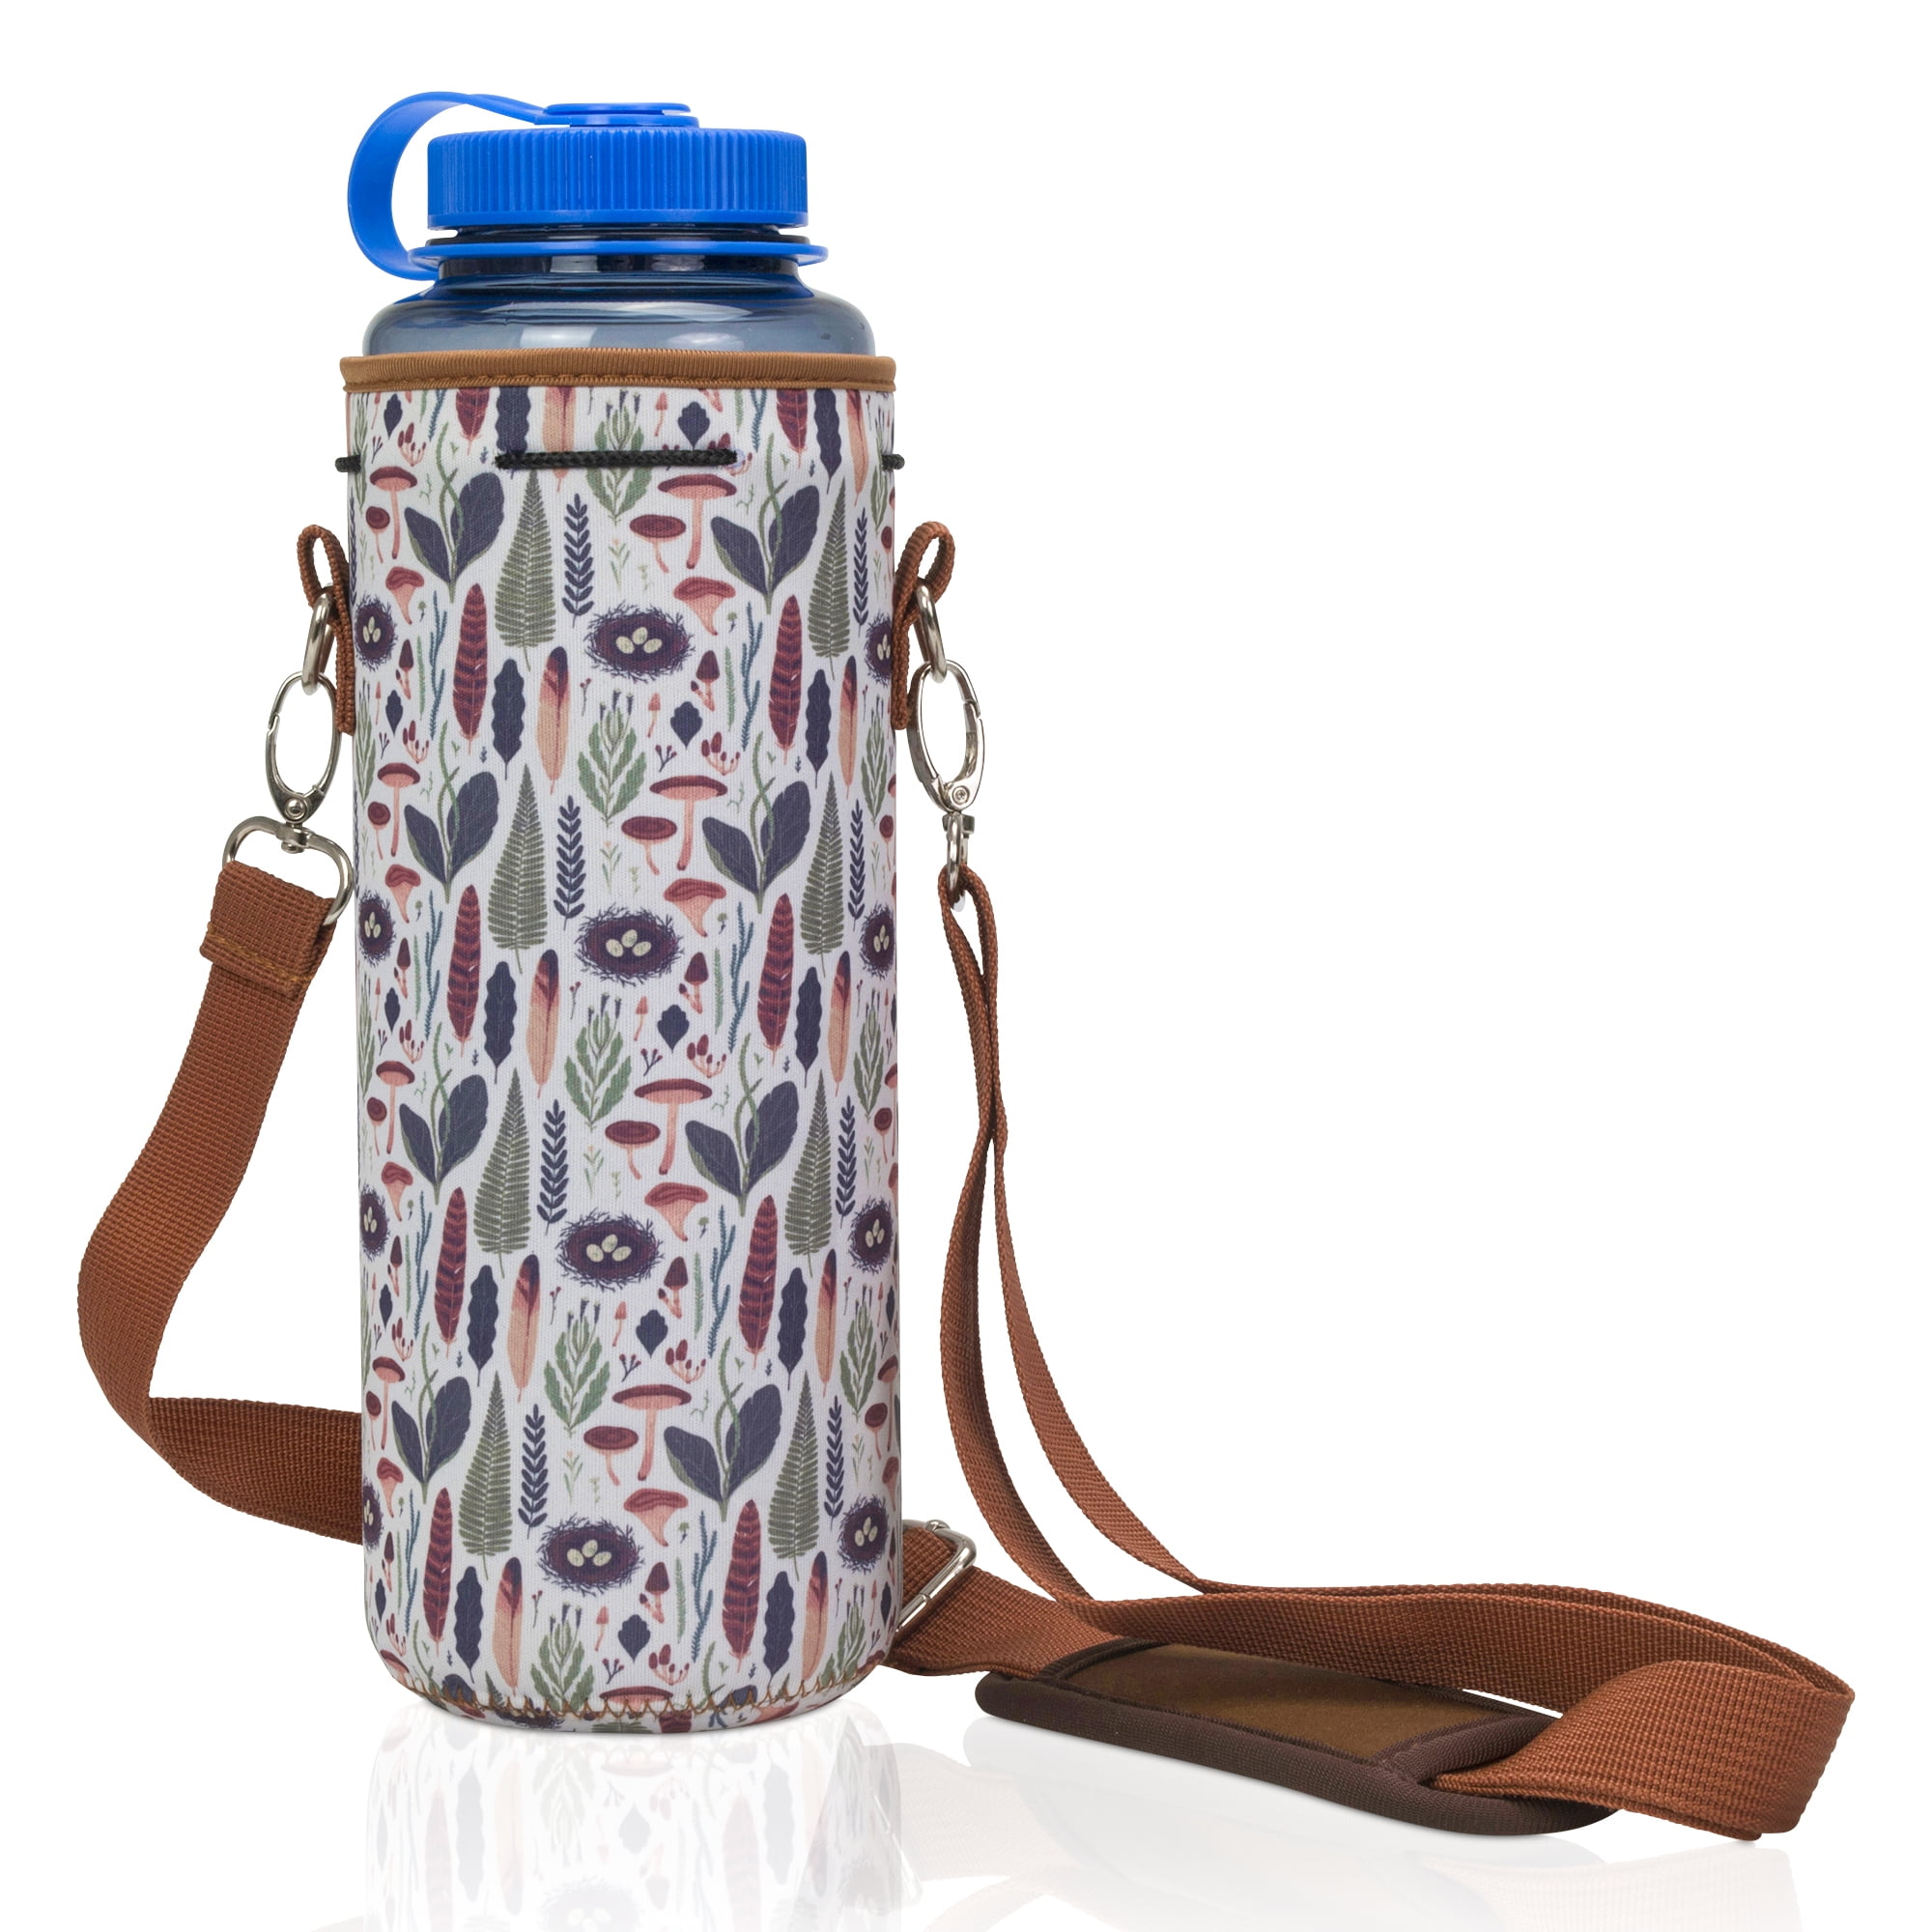 Nuovoware Water Bottle Carrier Bag Fits Stanley Quencher H2.0, 40oz Bottle Pouch Holder with Adjustable Shoulder Strap, Neoprene Water Bottle Holder